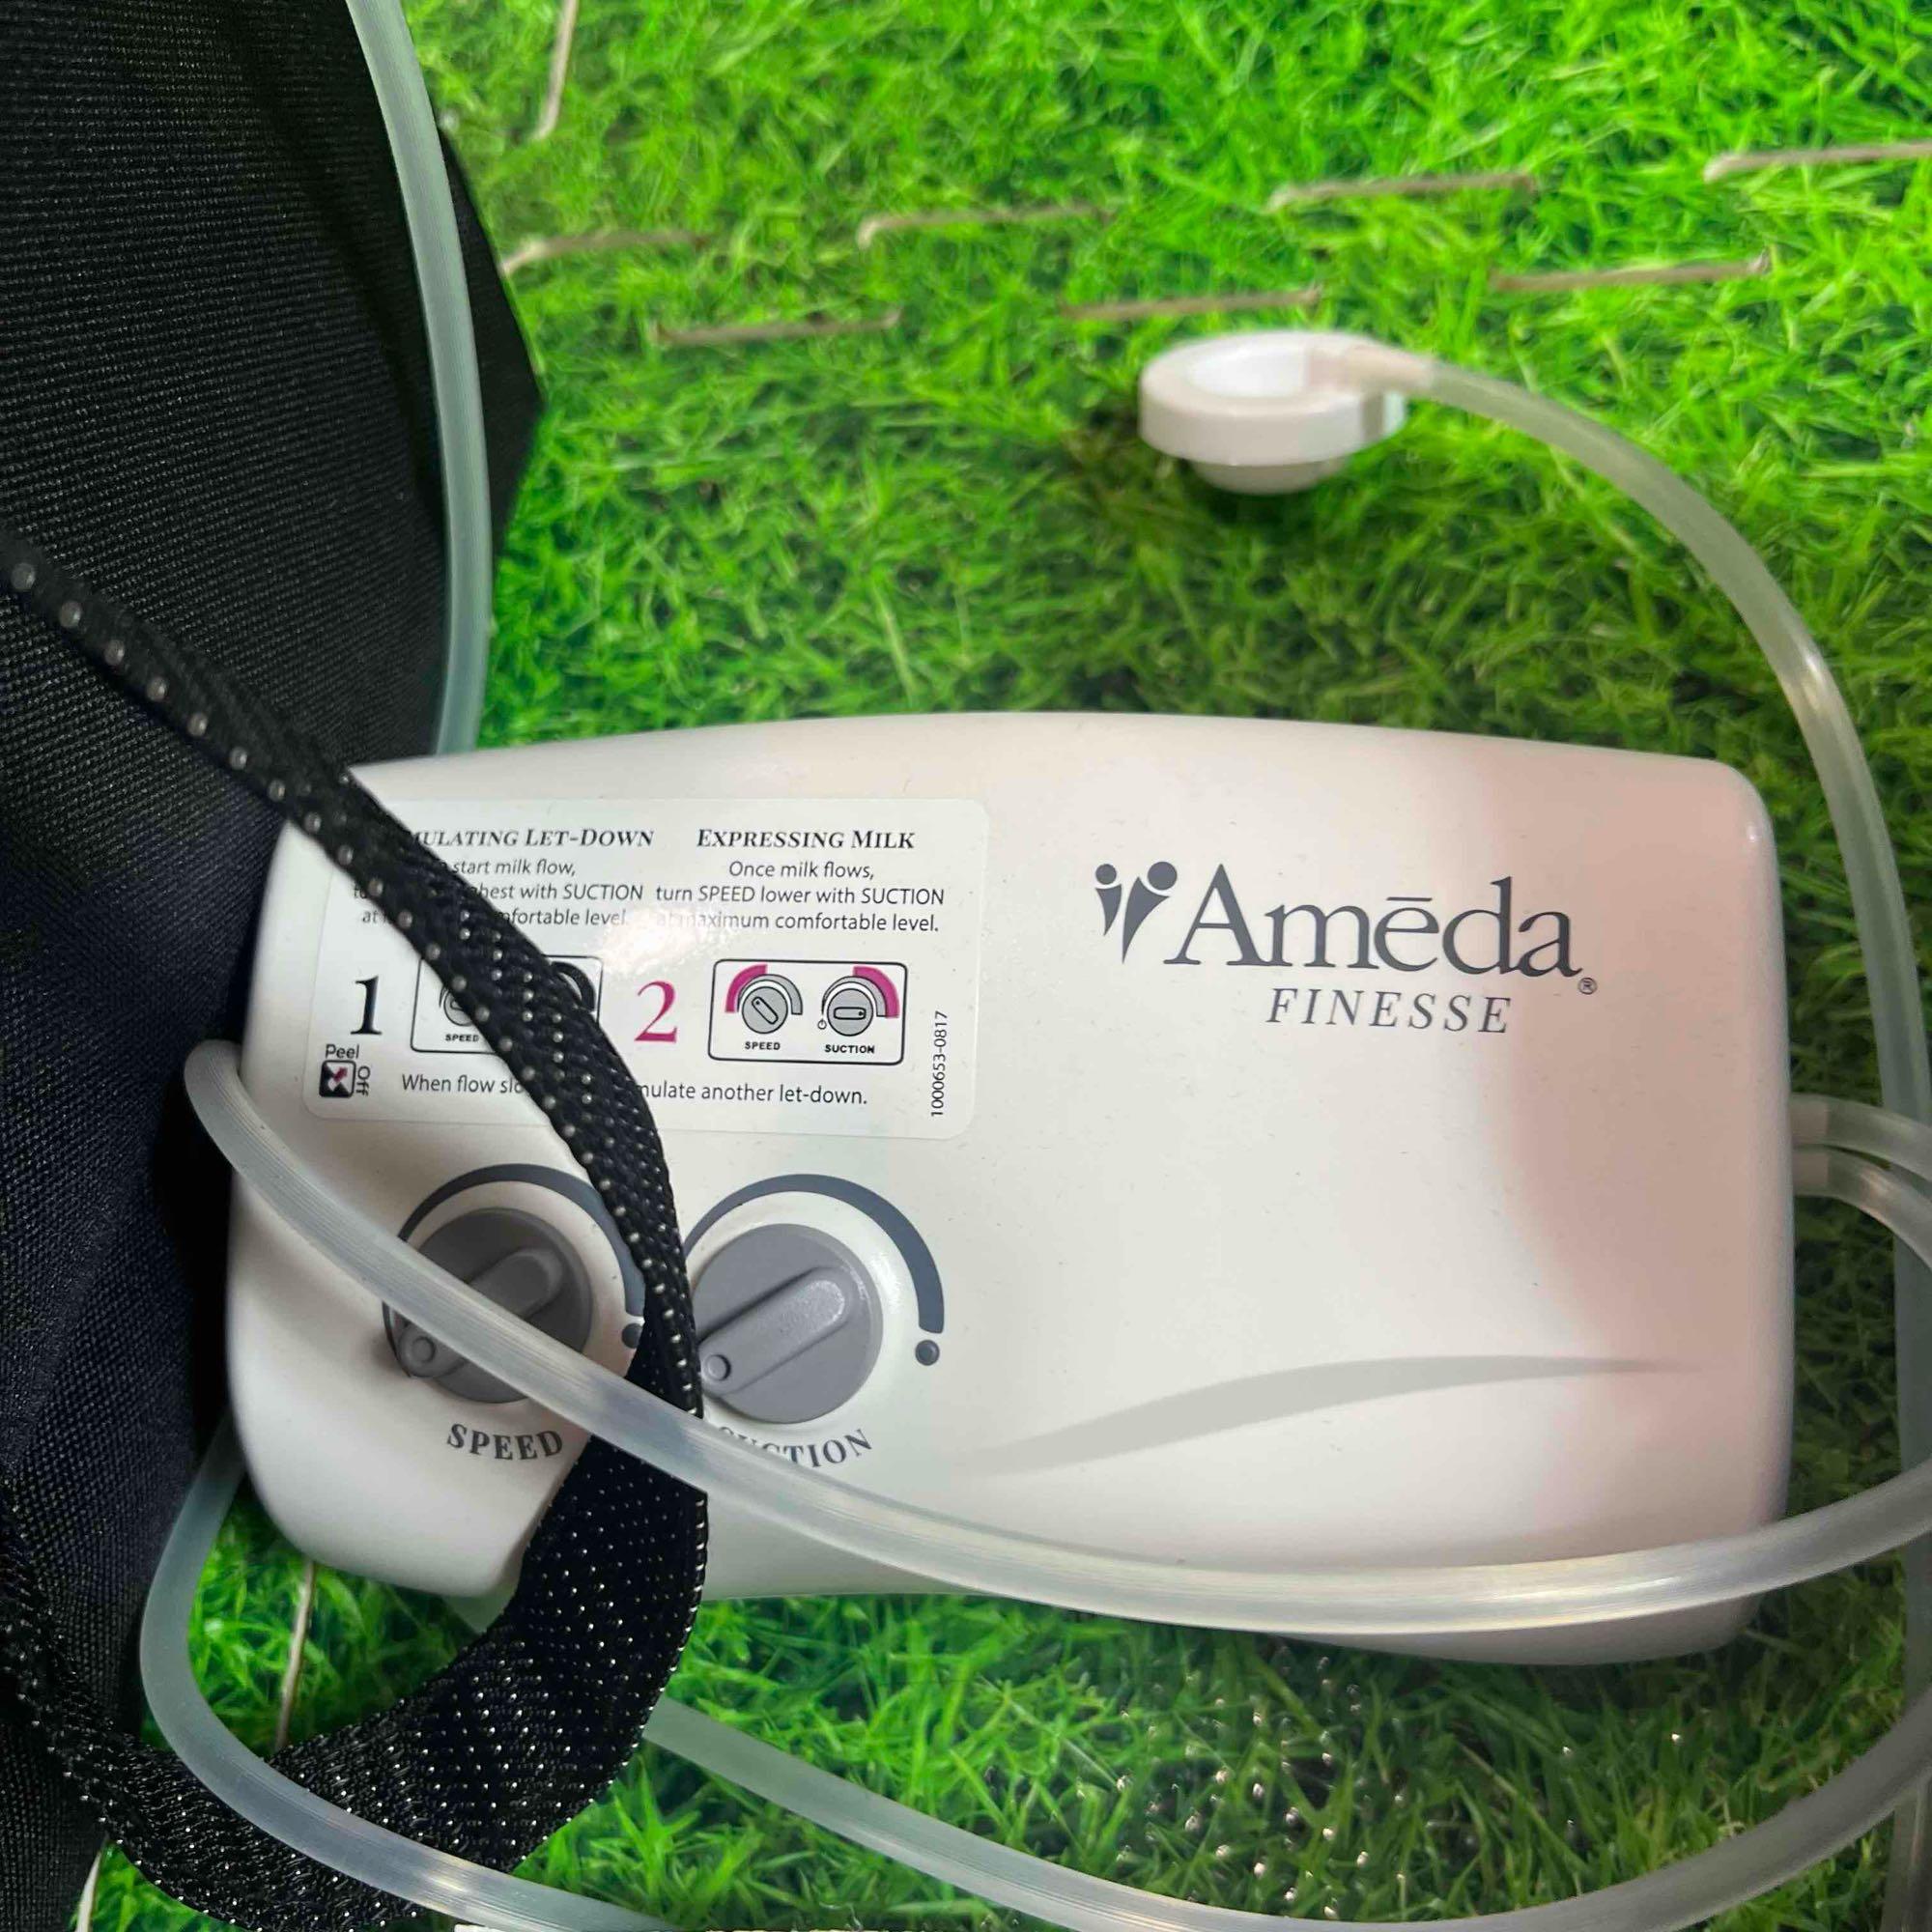 Ameda Finesse breast pump new